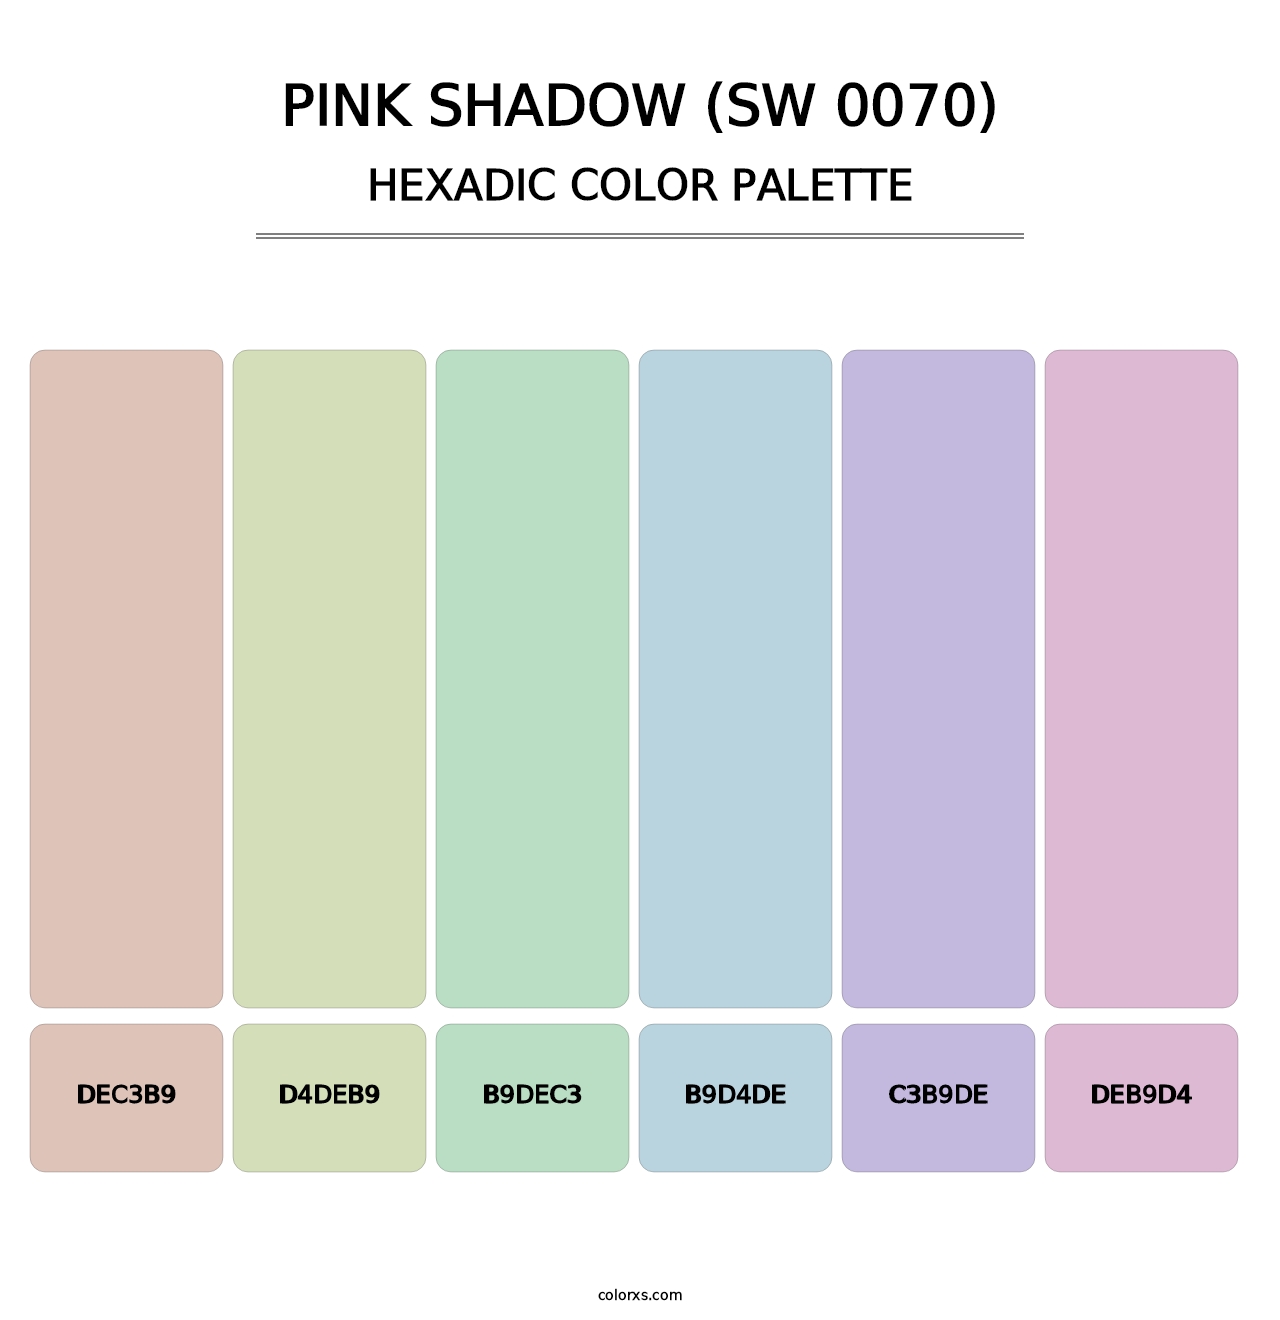 Pink Shadow (SW 0070) - Hexadic Color Palette